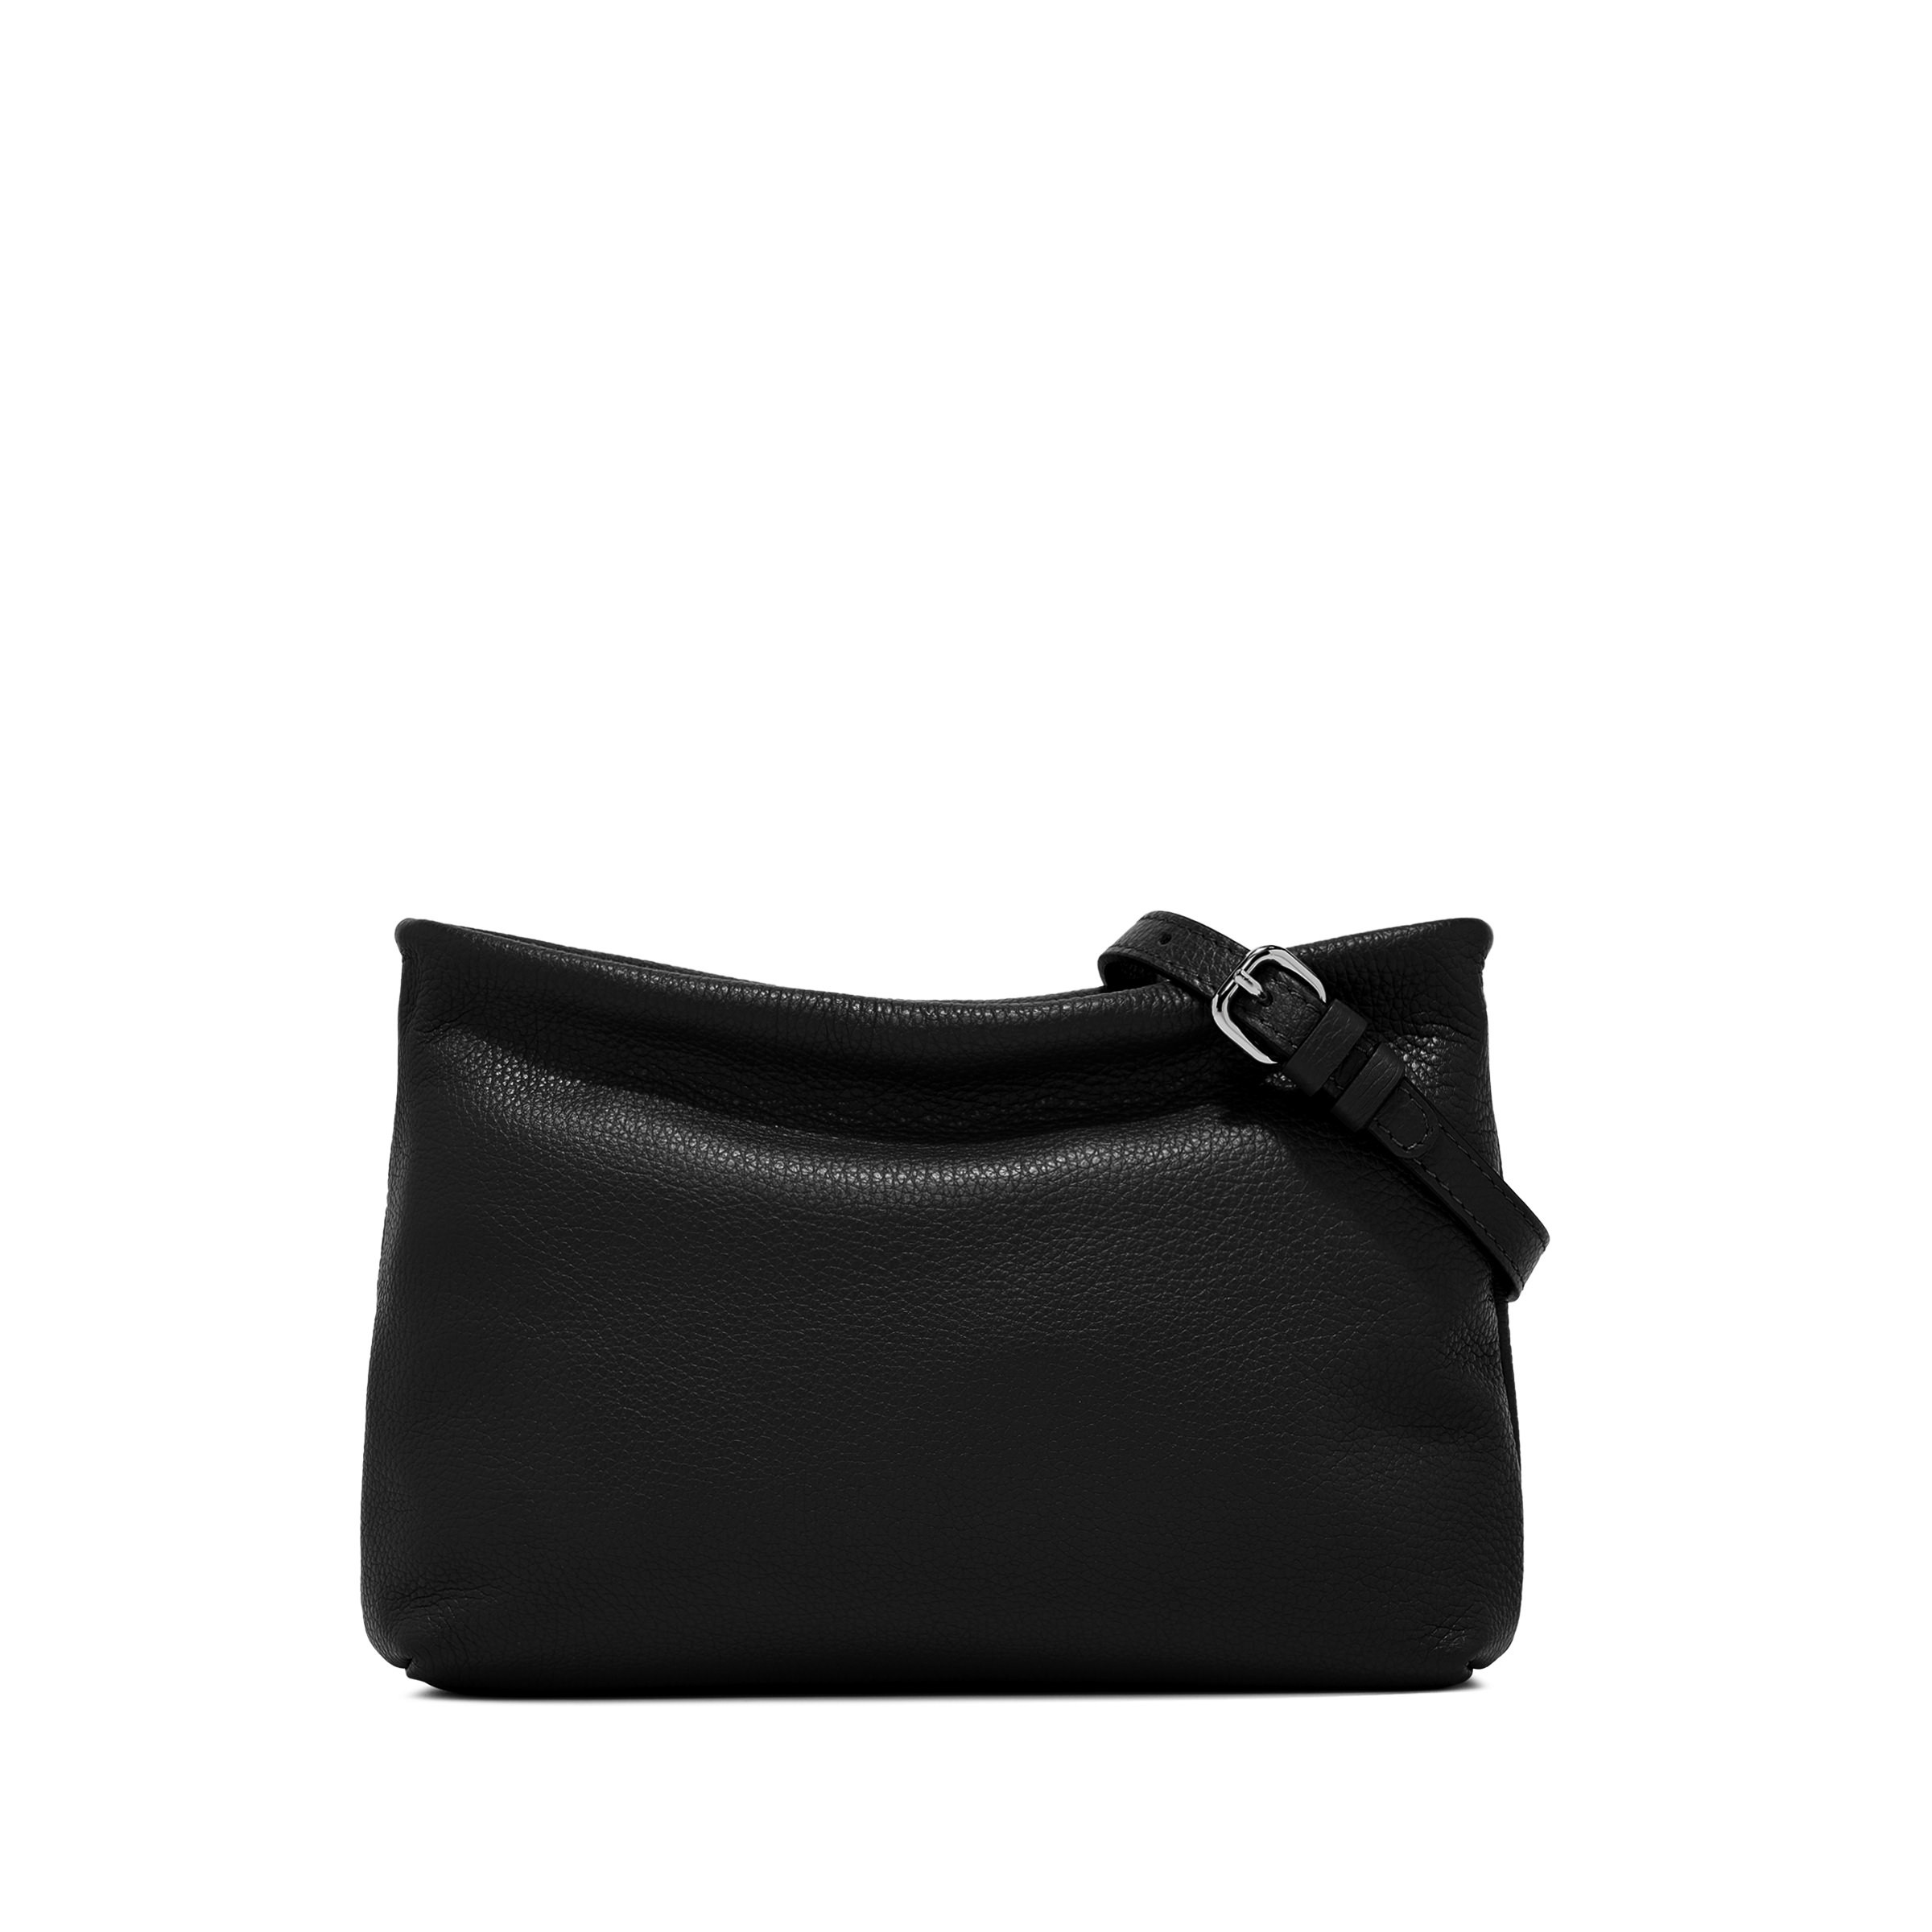 Gianni Chiarini - Brenda leather bag, Black, large image number 1